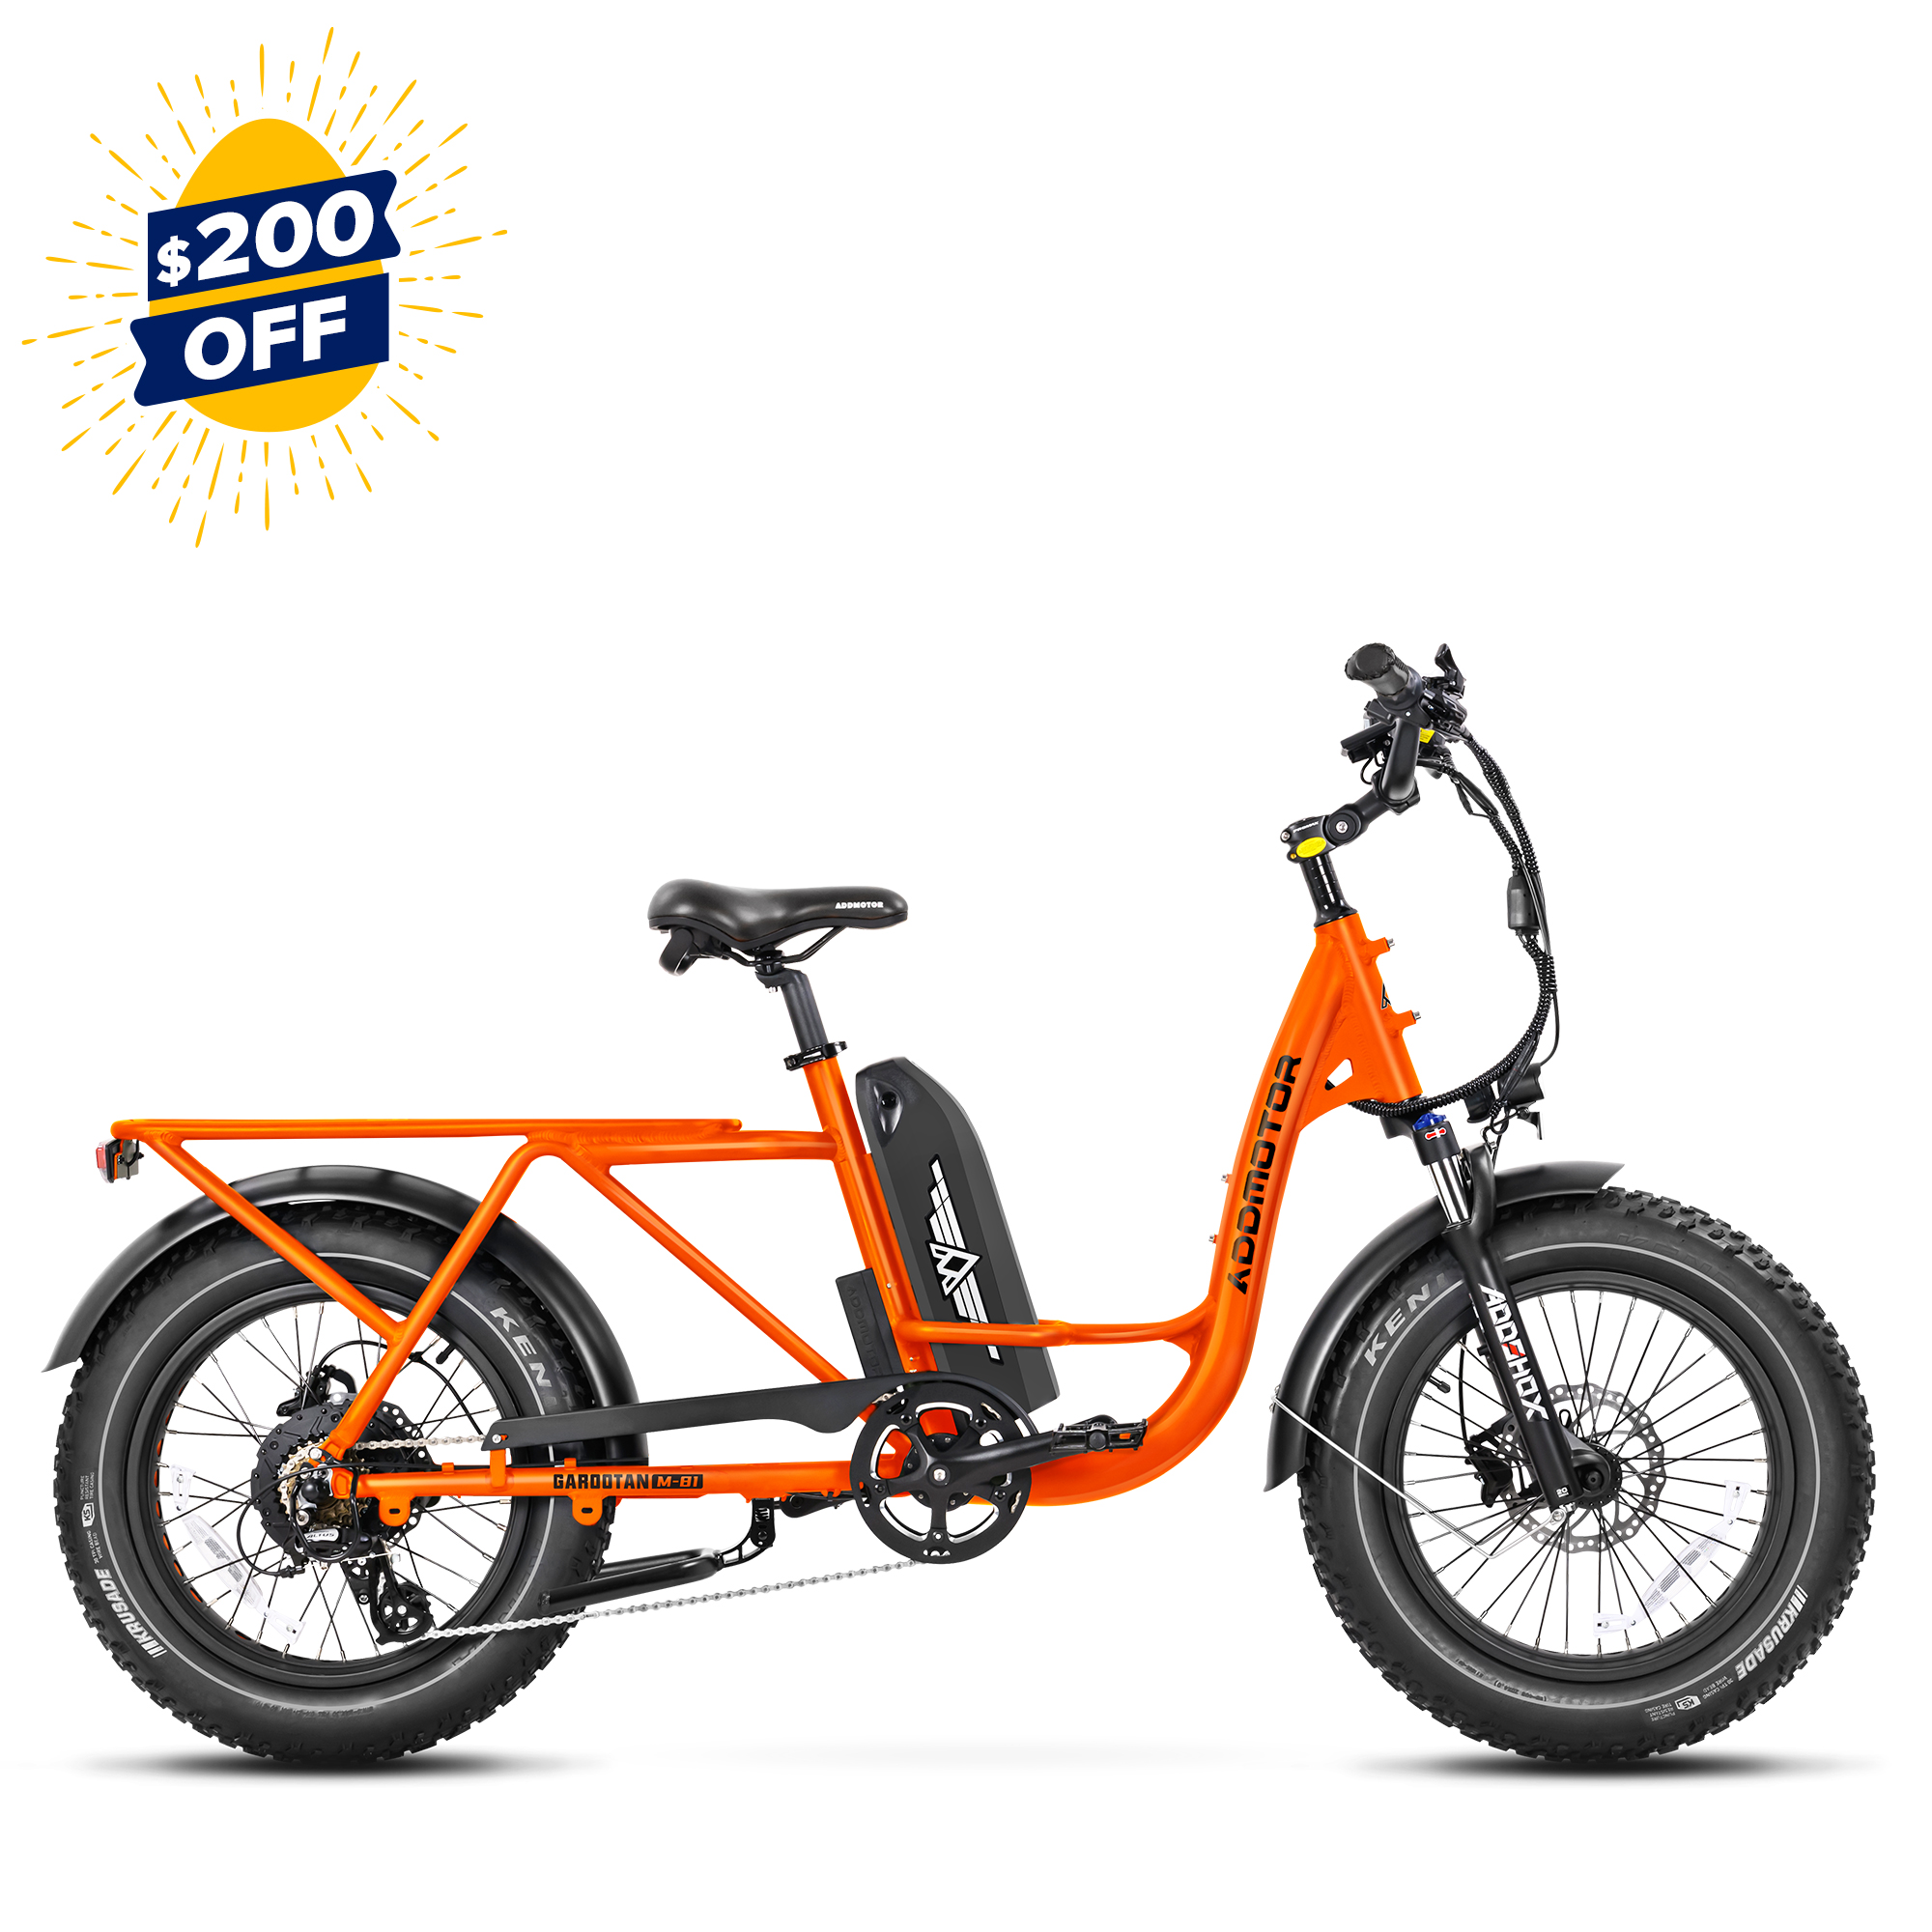 extra $200 off GAROOTAN M-81 cargo electric bike